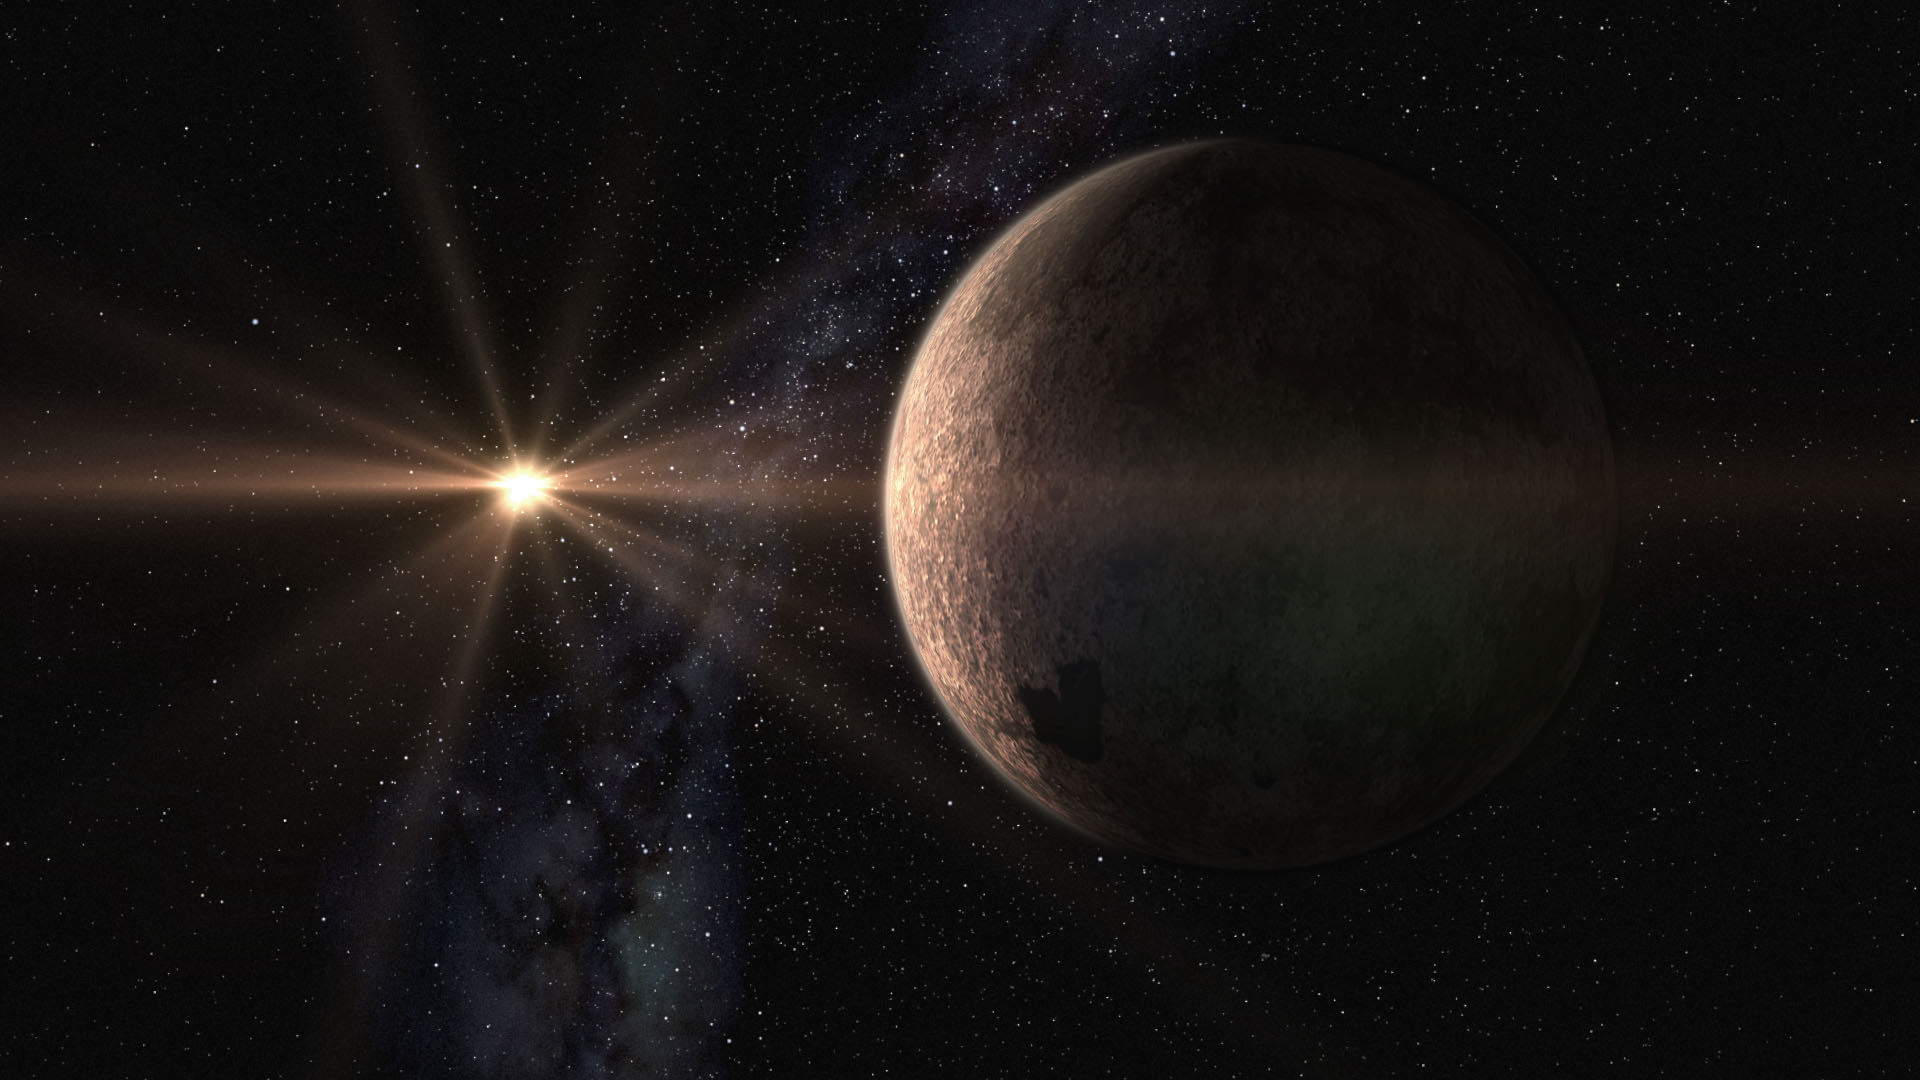 Cold super-Earth, Red dwarf Barnard, Earth system, Barnard, Super Earth, Europa, Science news, Technology news